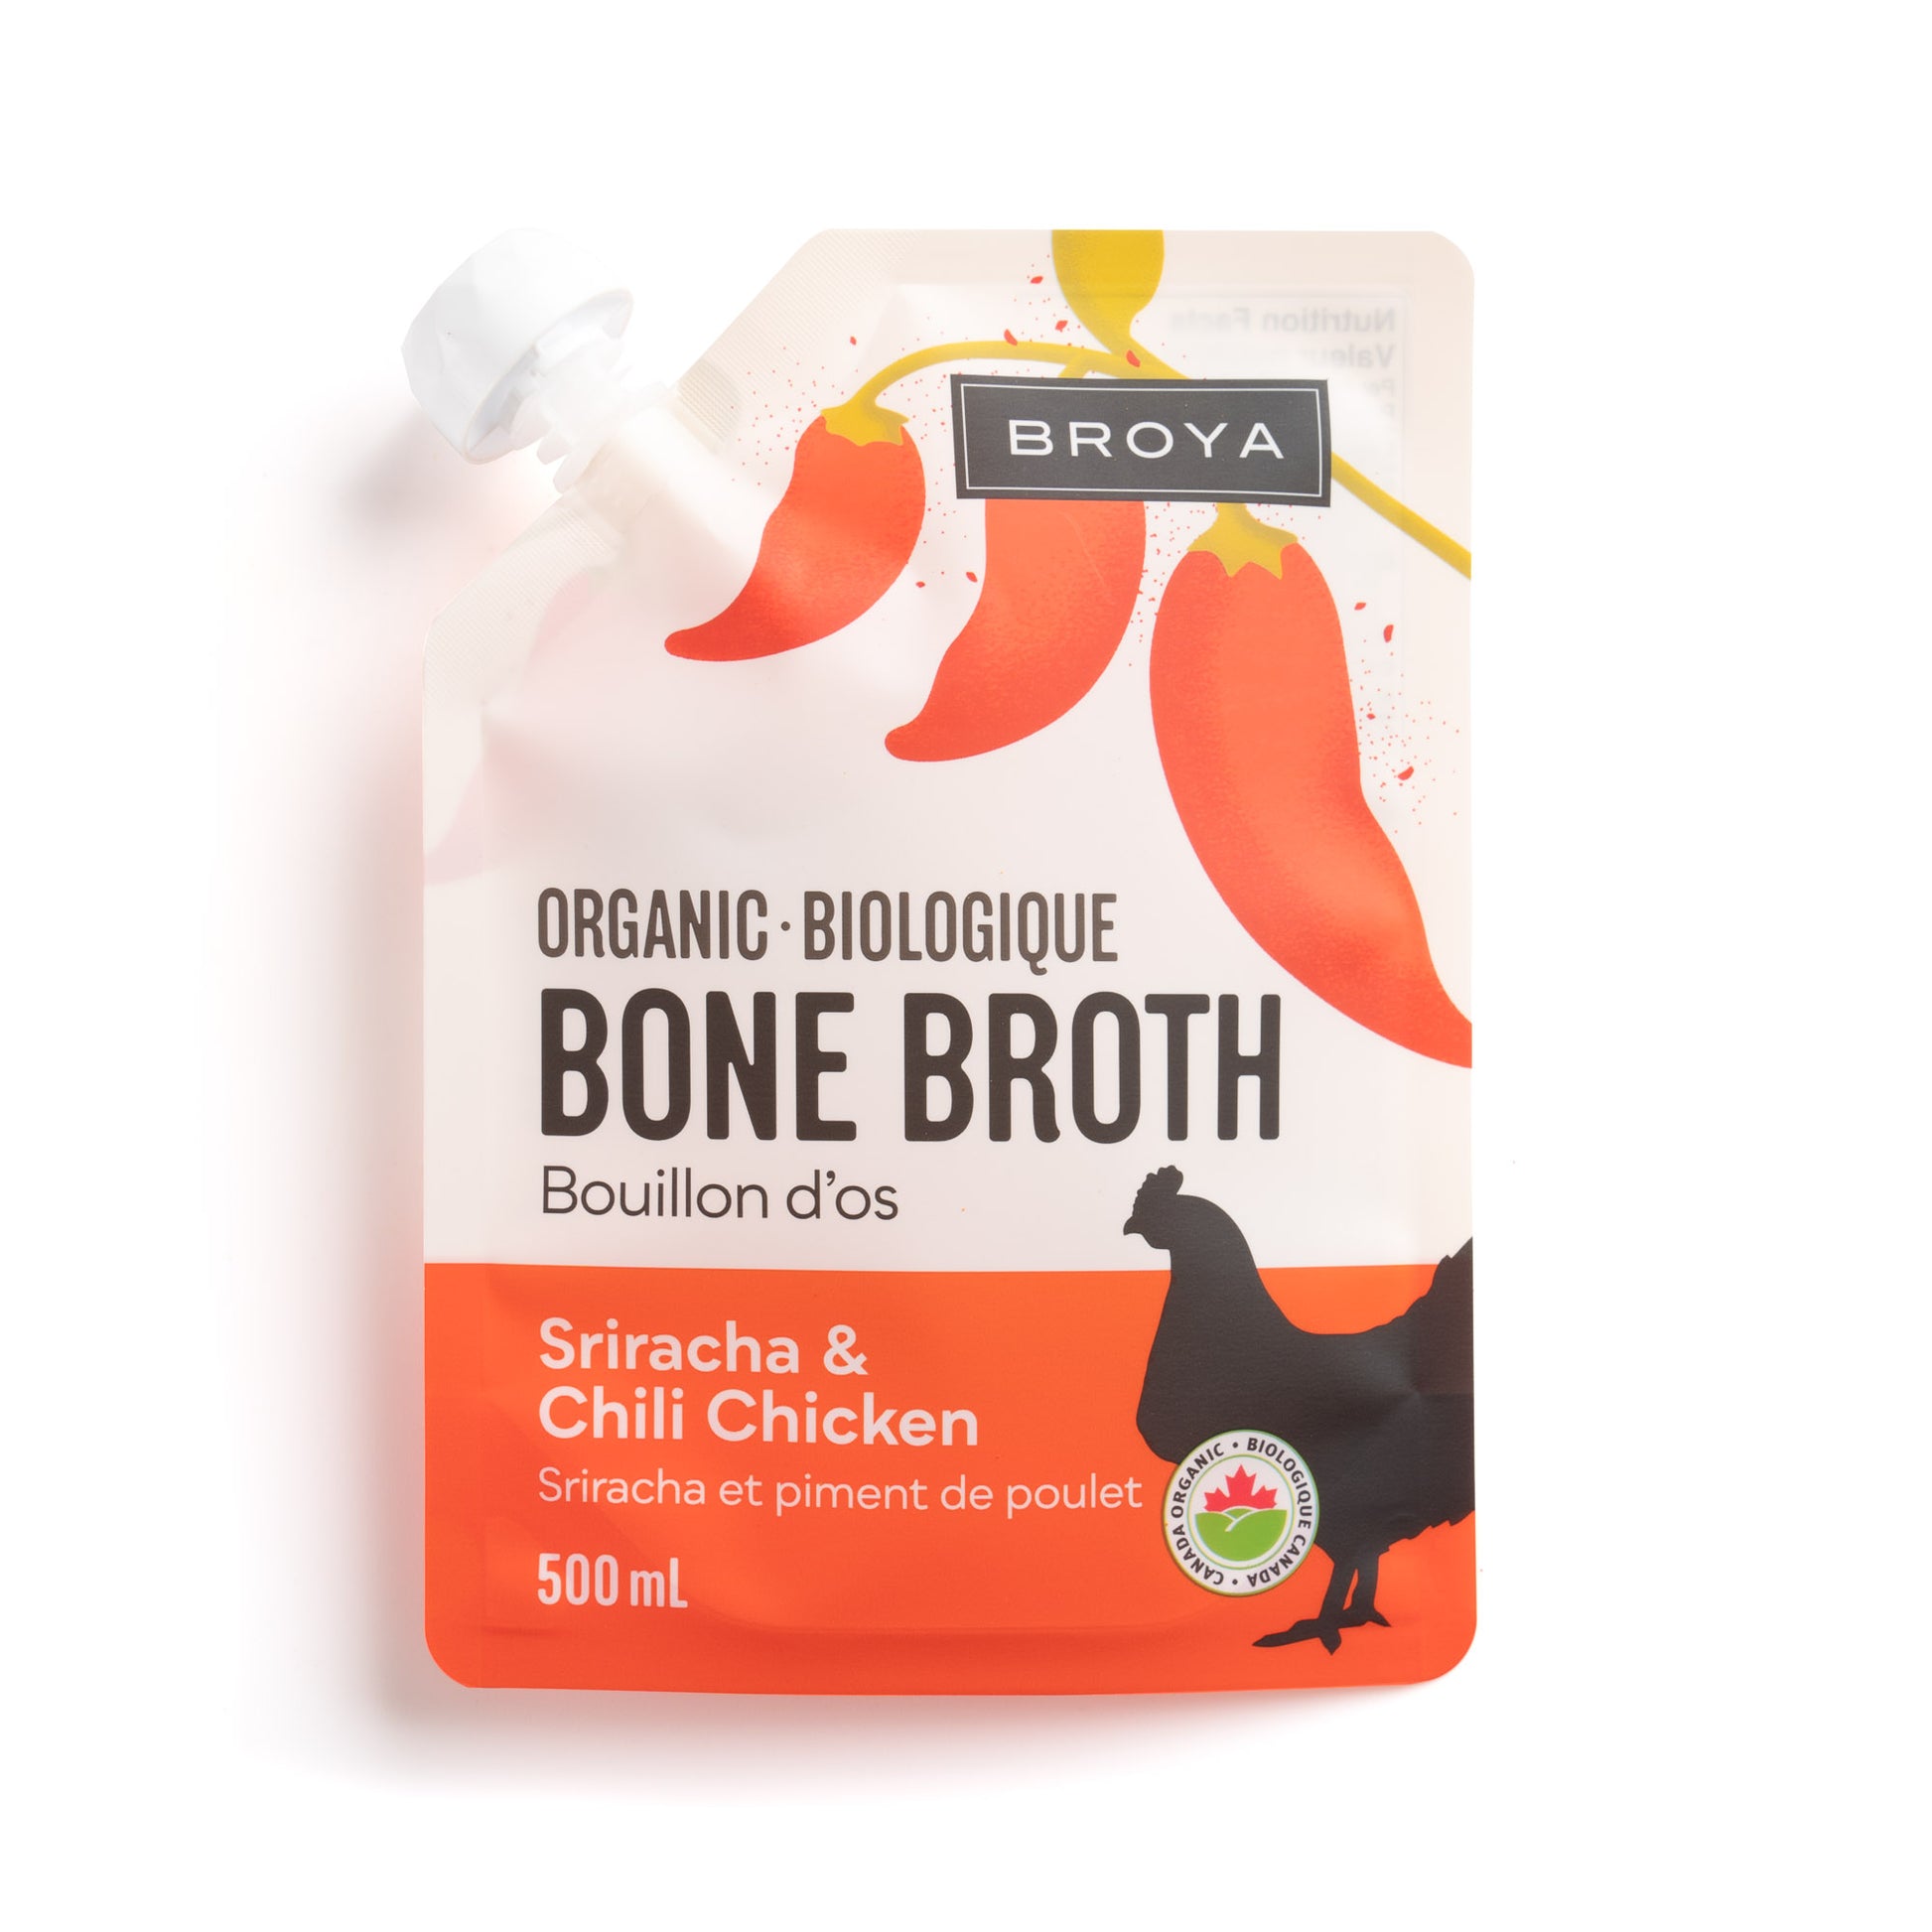 Sriracha & Chili Chicken Bone Broth